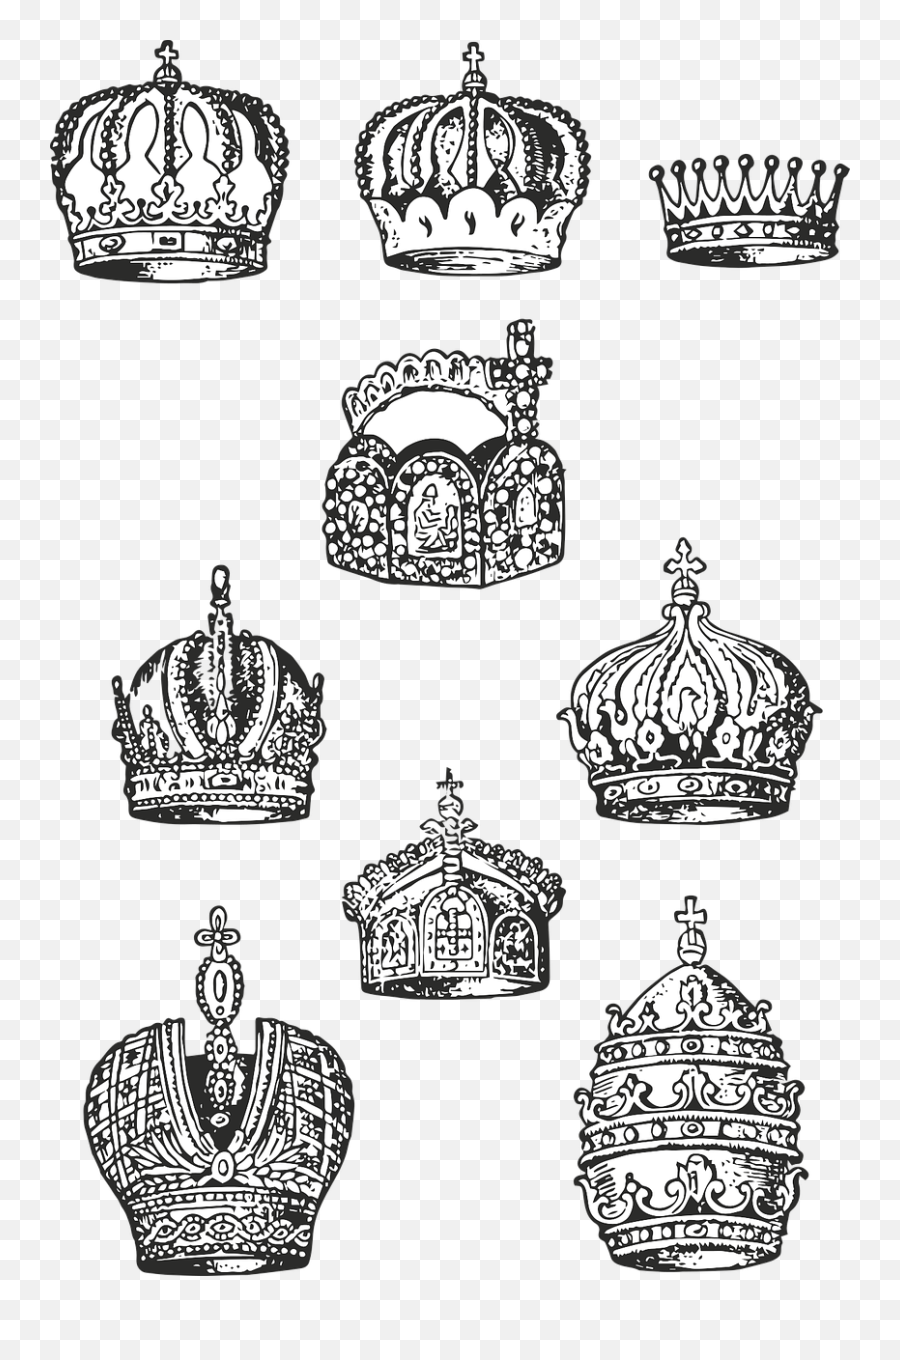 Crown Public Domain Image Search - Freeimg Emoji,Flower Crown Clipart